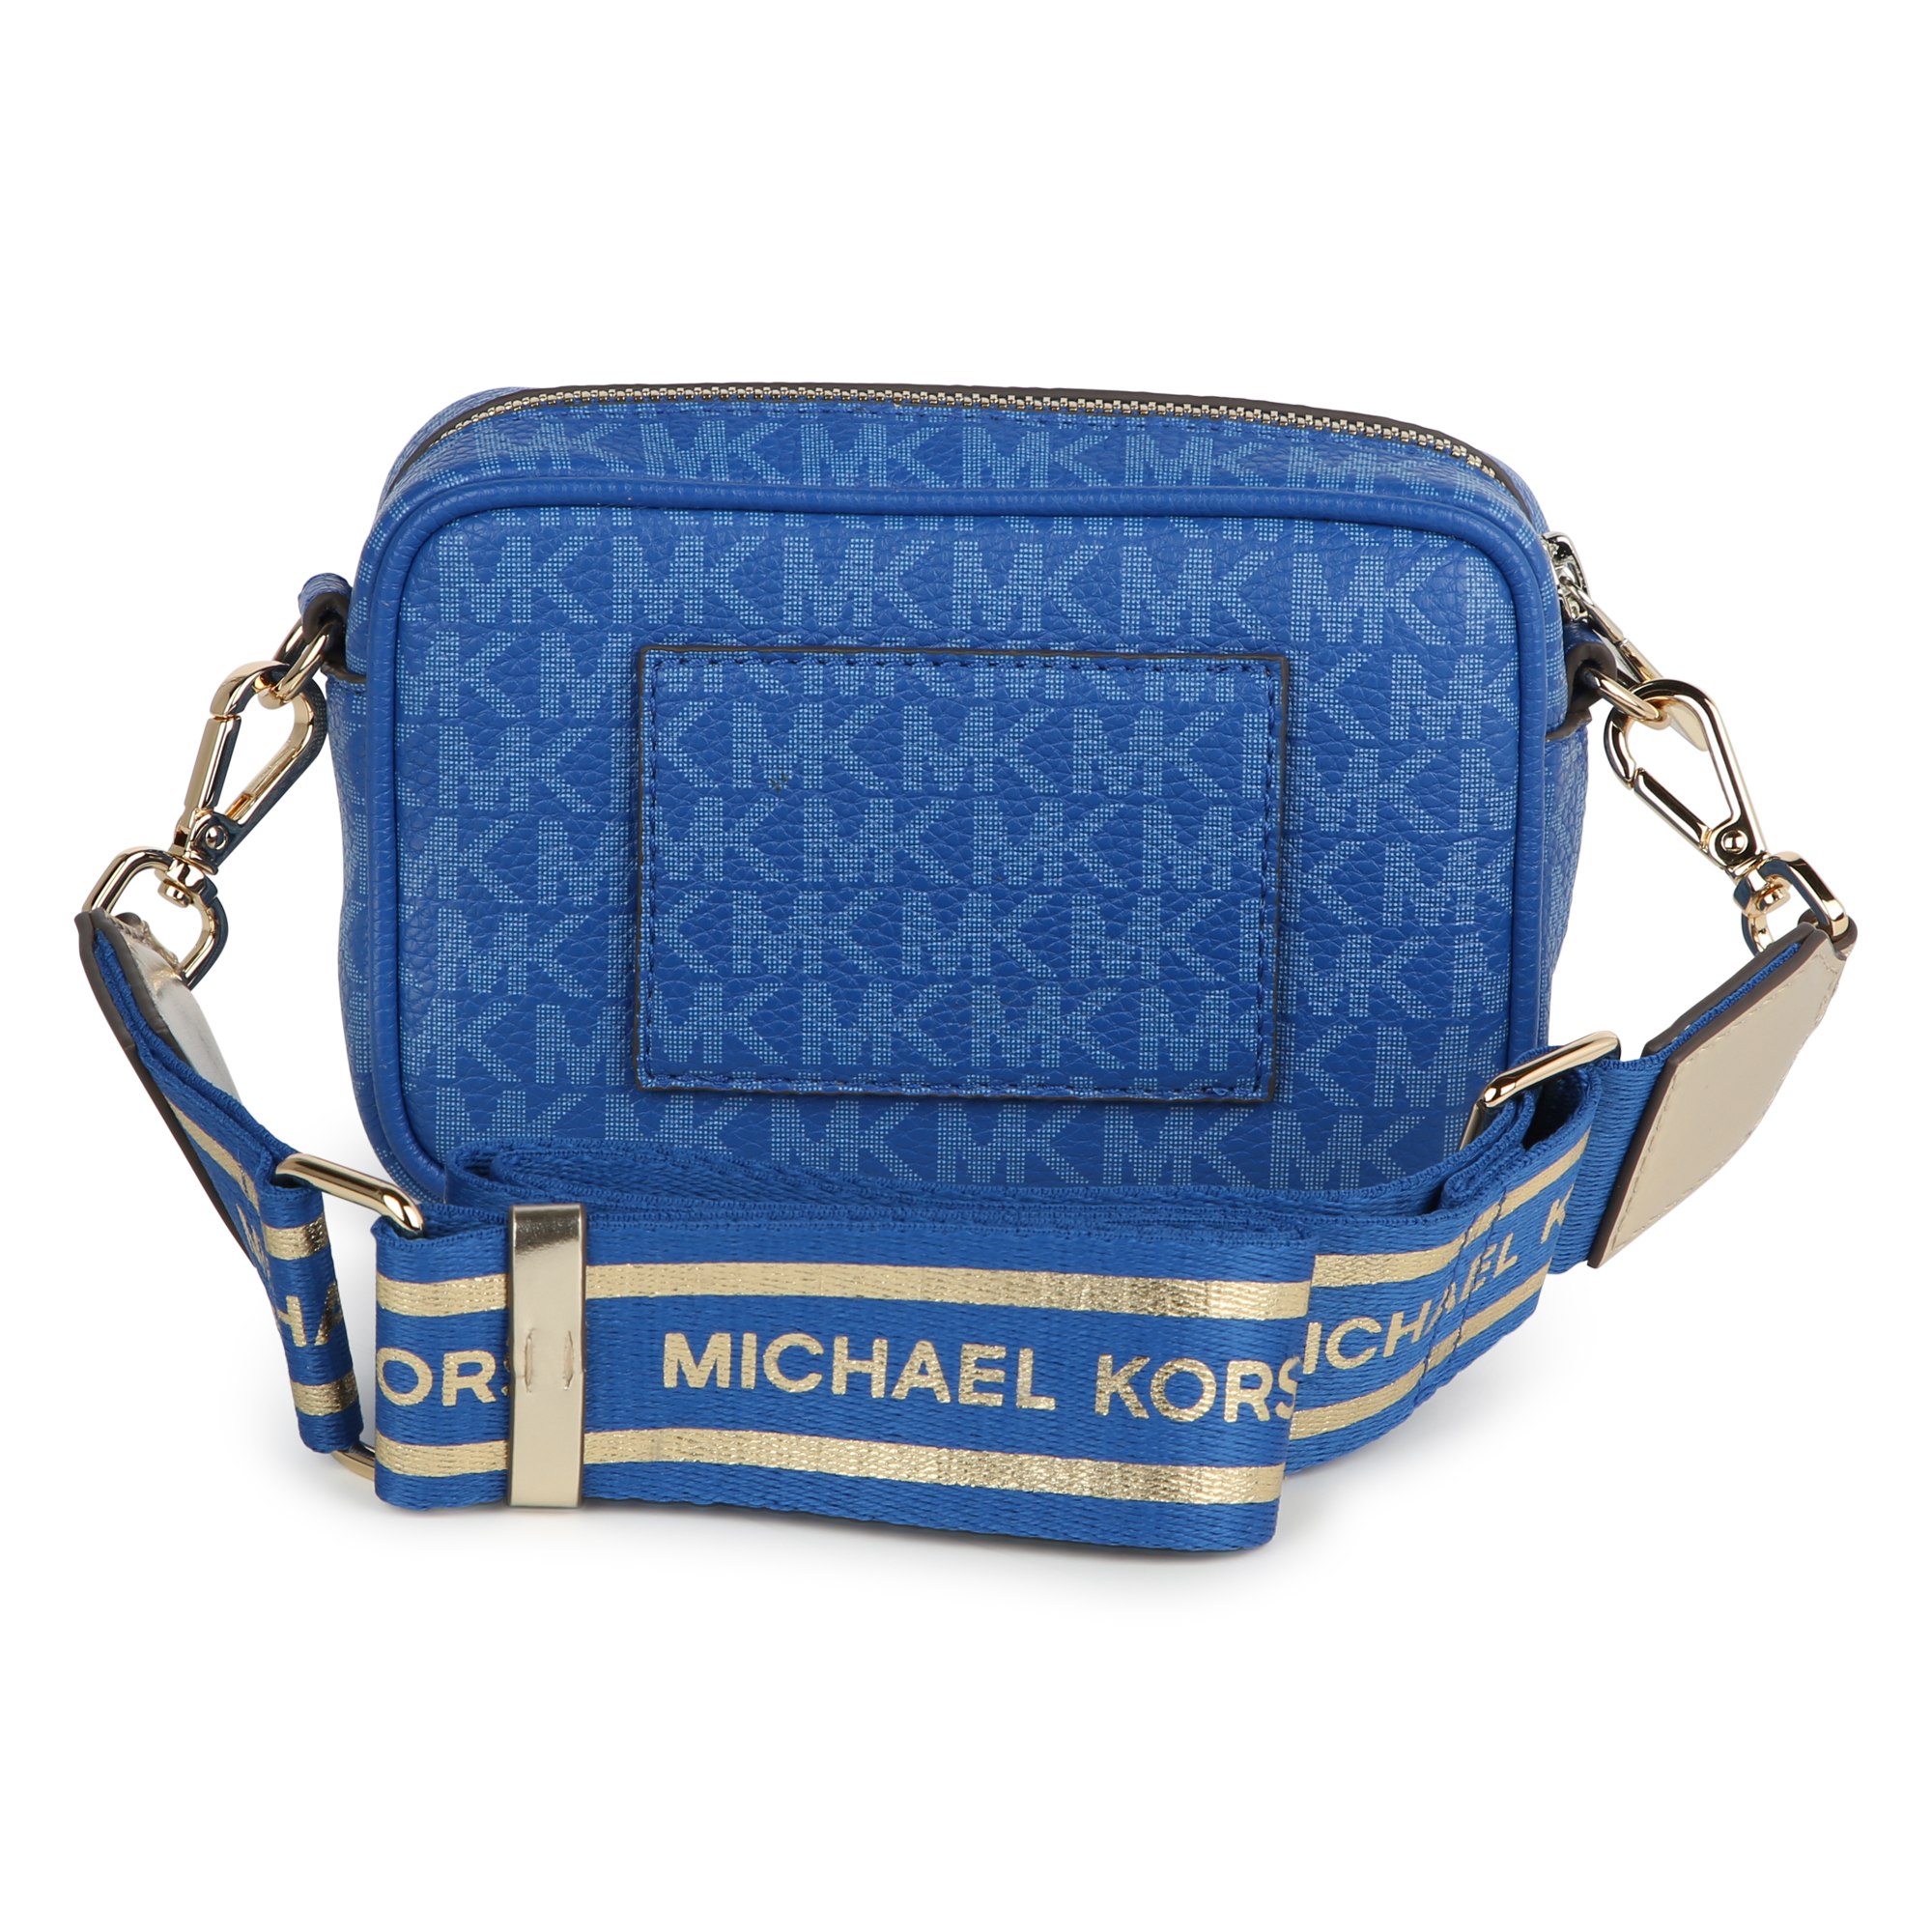 2-in-1 printed handbag MICHAEL KORS for GIRL